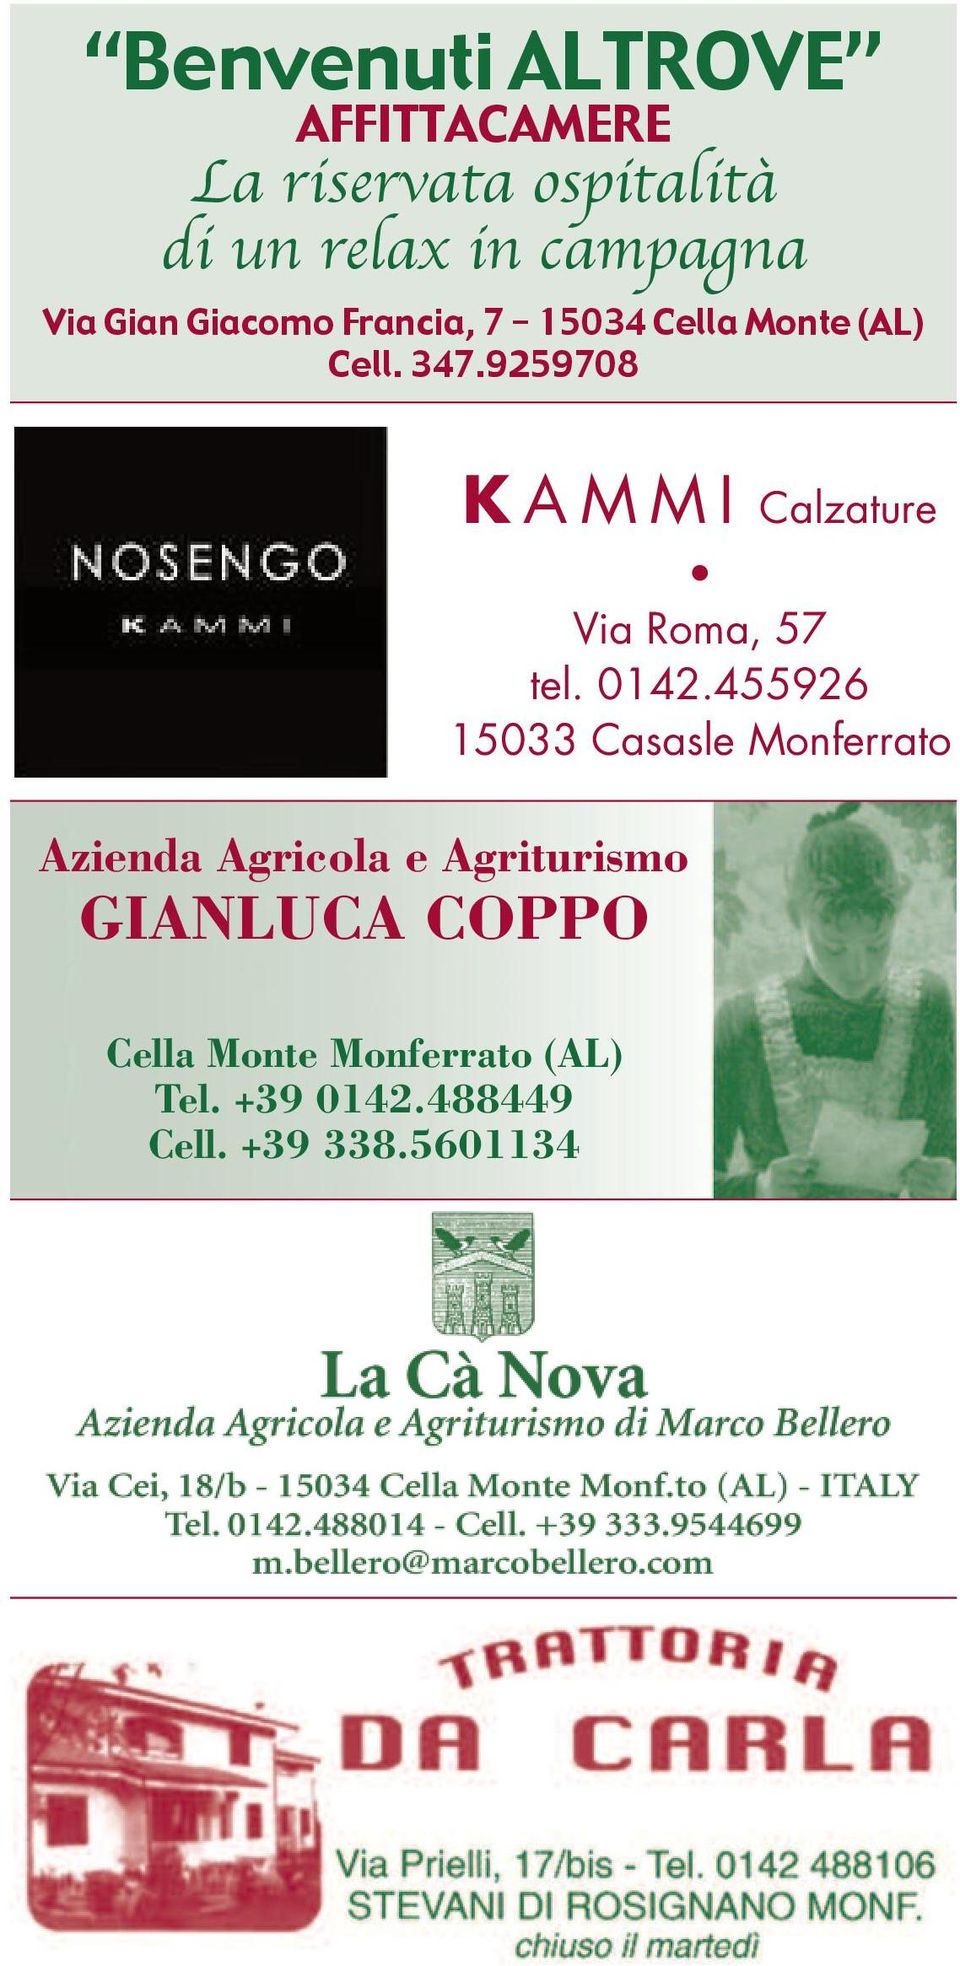 9259708 Azienda Agricola e Agriturismo GIANLUCA COPPO K A M M I Calzature Via Roma,